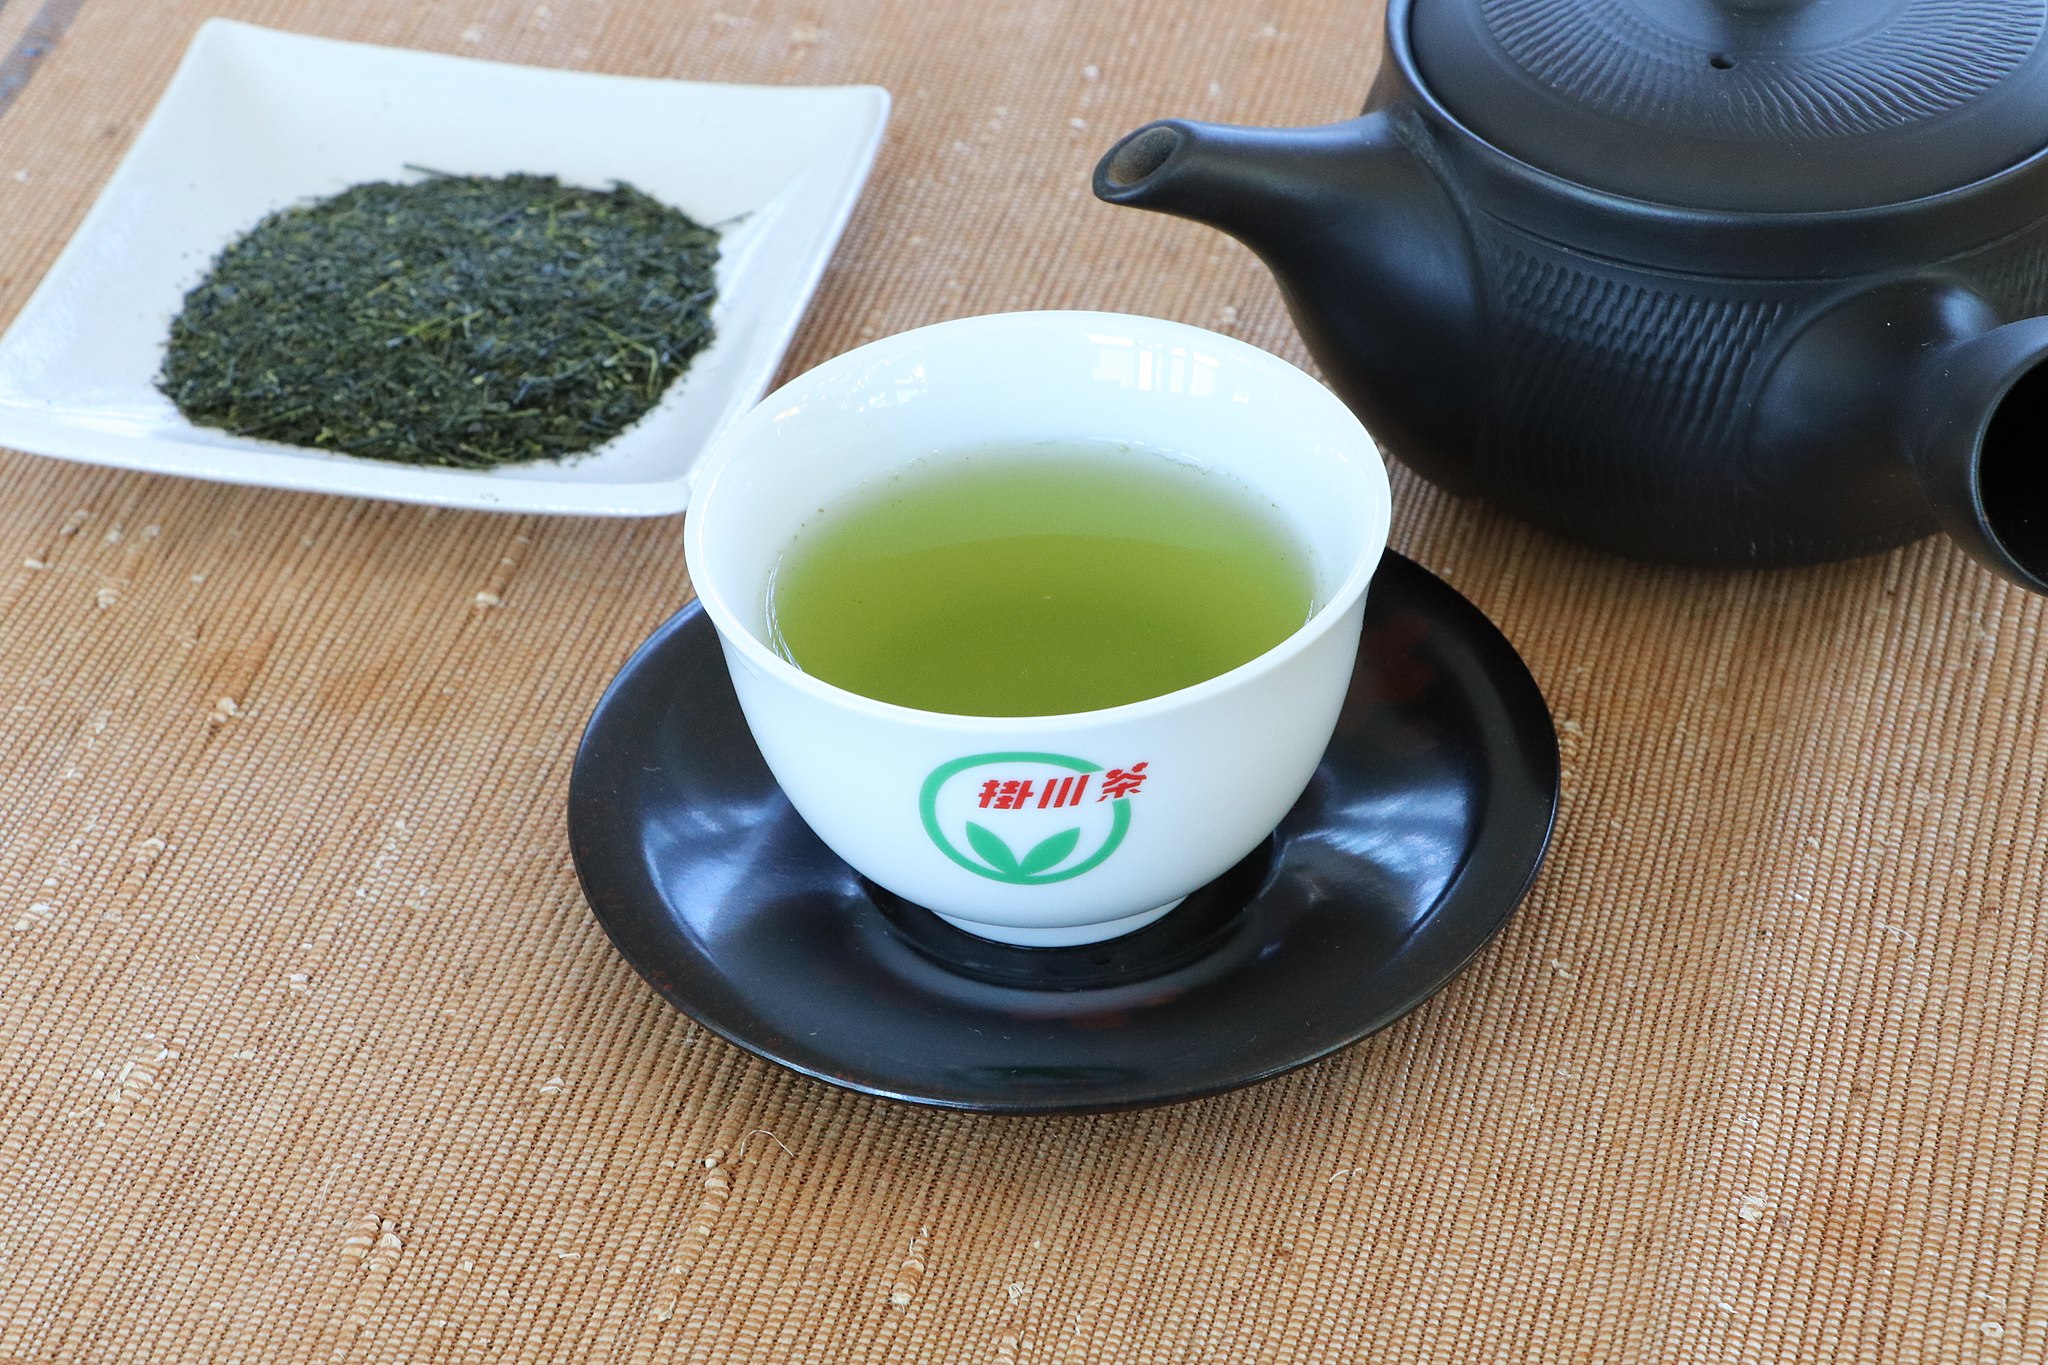 Cup of green tea.